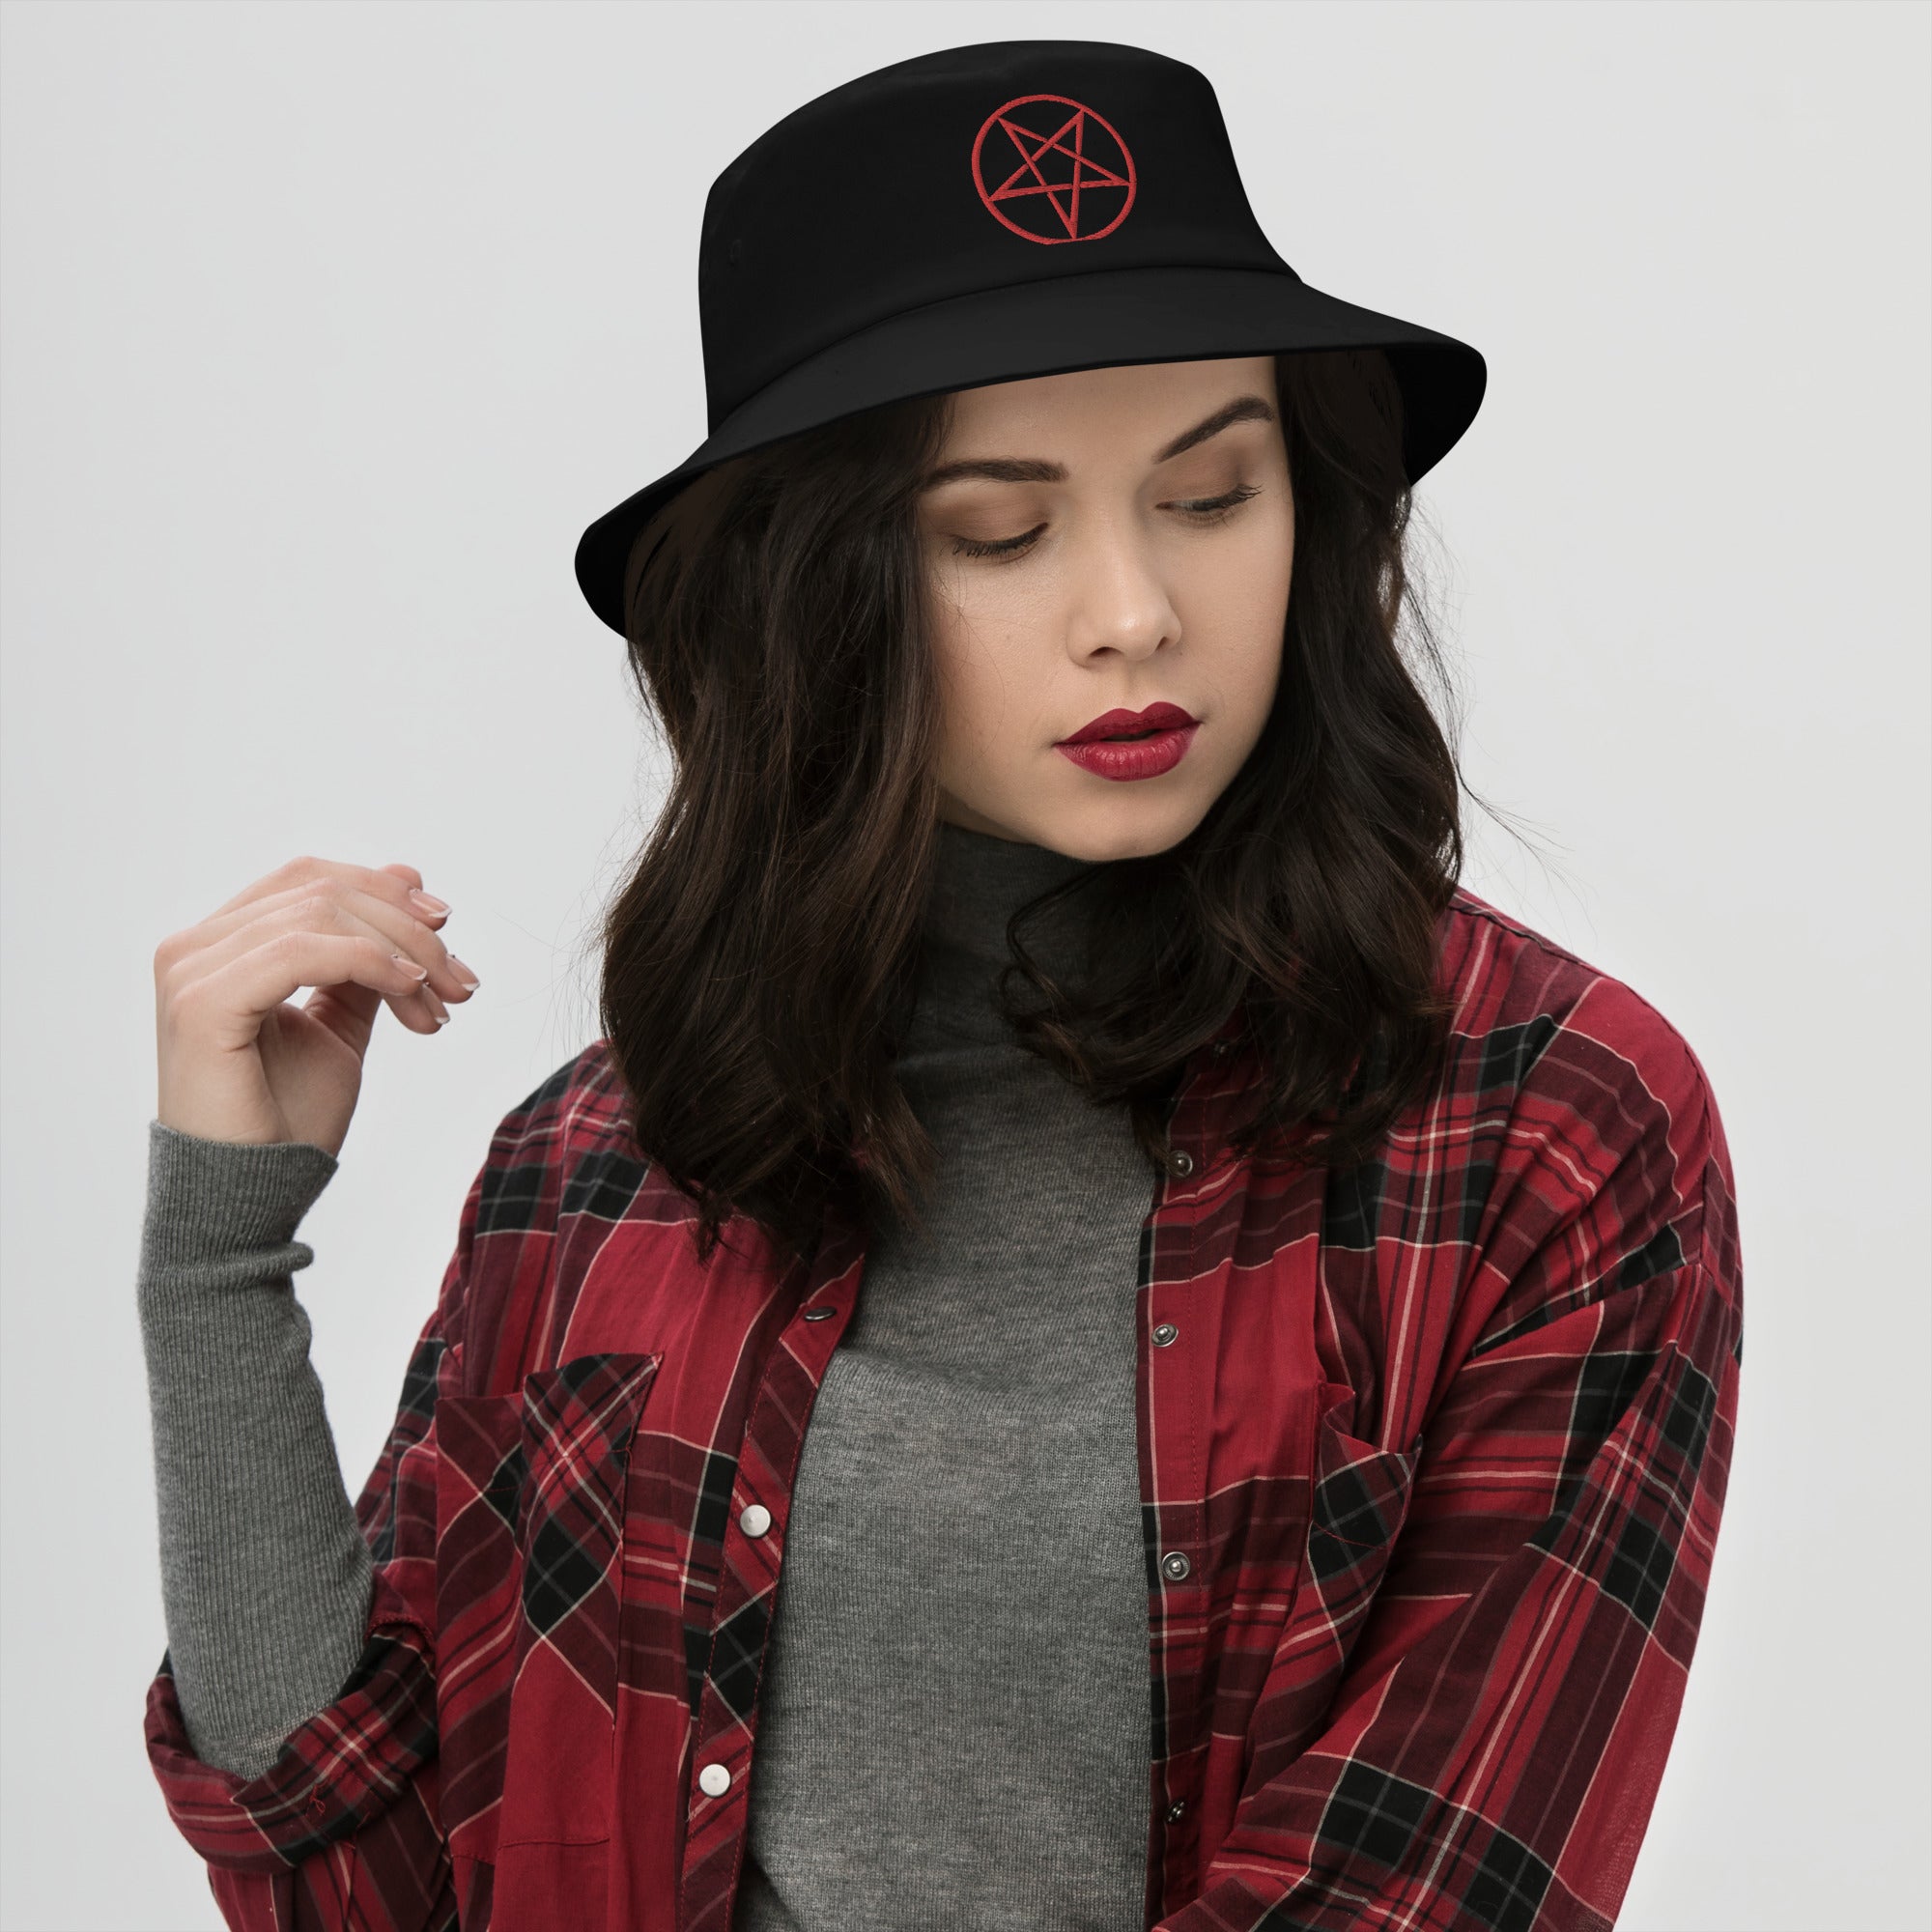 Red Woven Inverted Pentagram Symbol Embroidered Bucket Hat Satanism